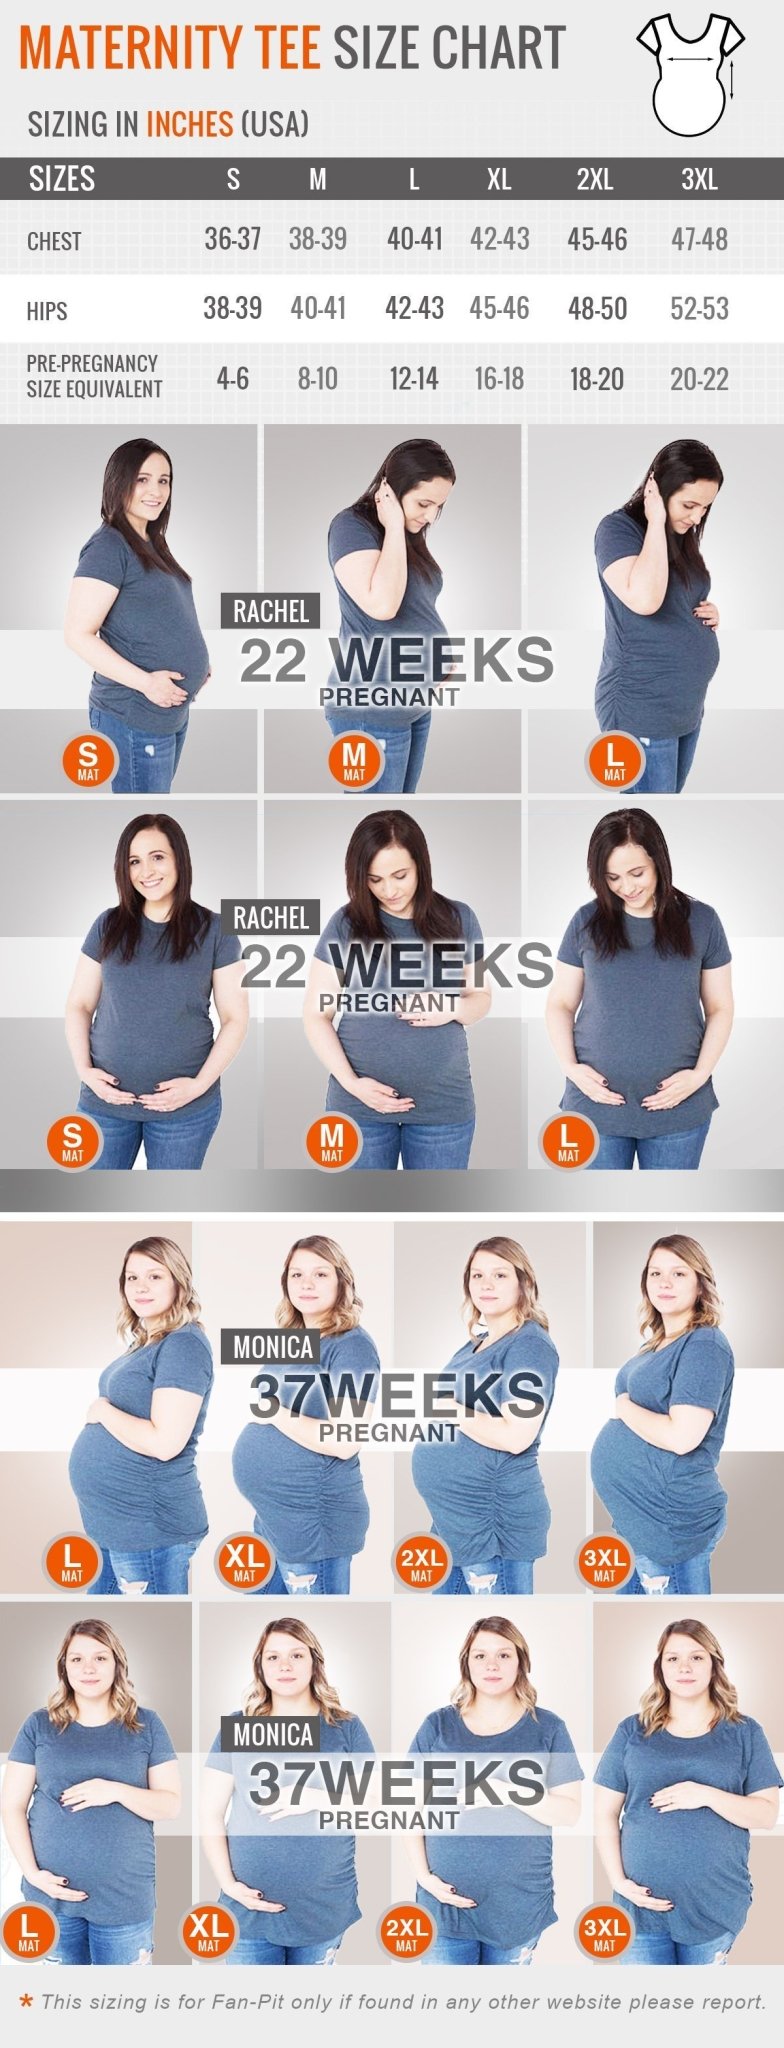 Expecting Patronum - Pregnancy Expecting Mother' Men's Premium Tank Top